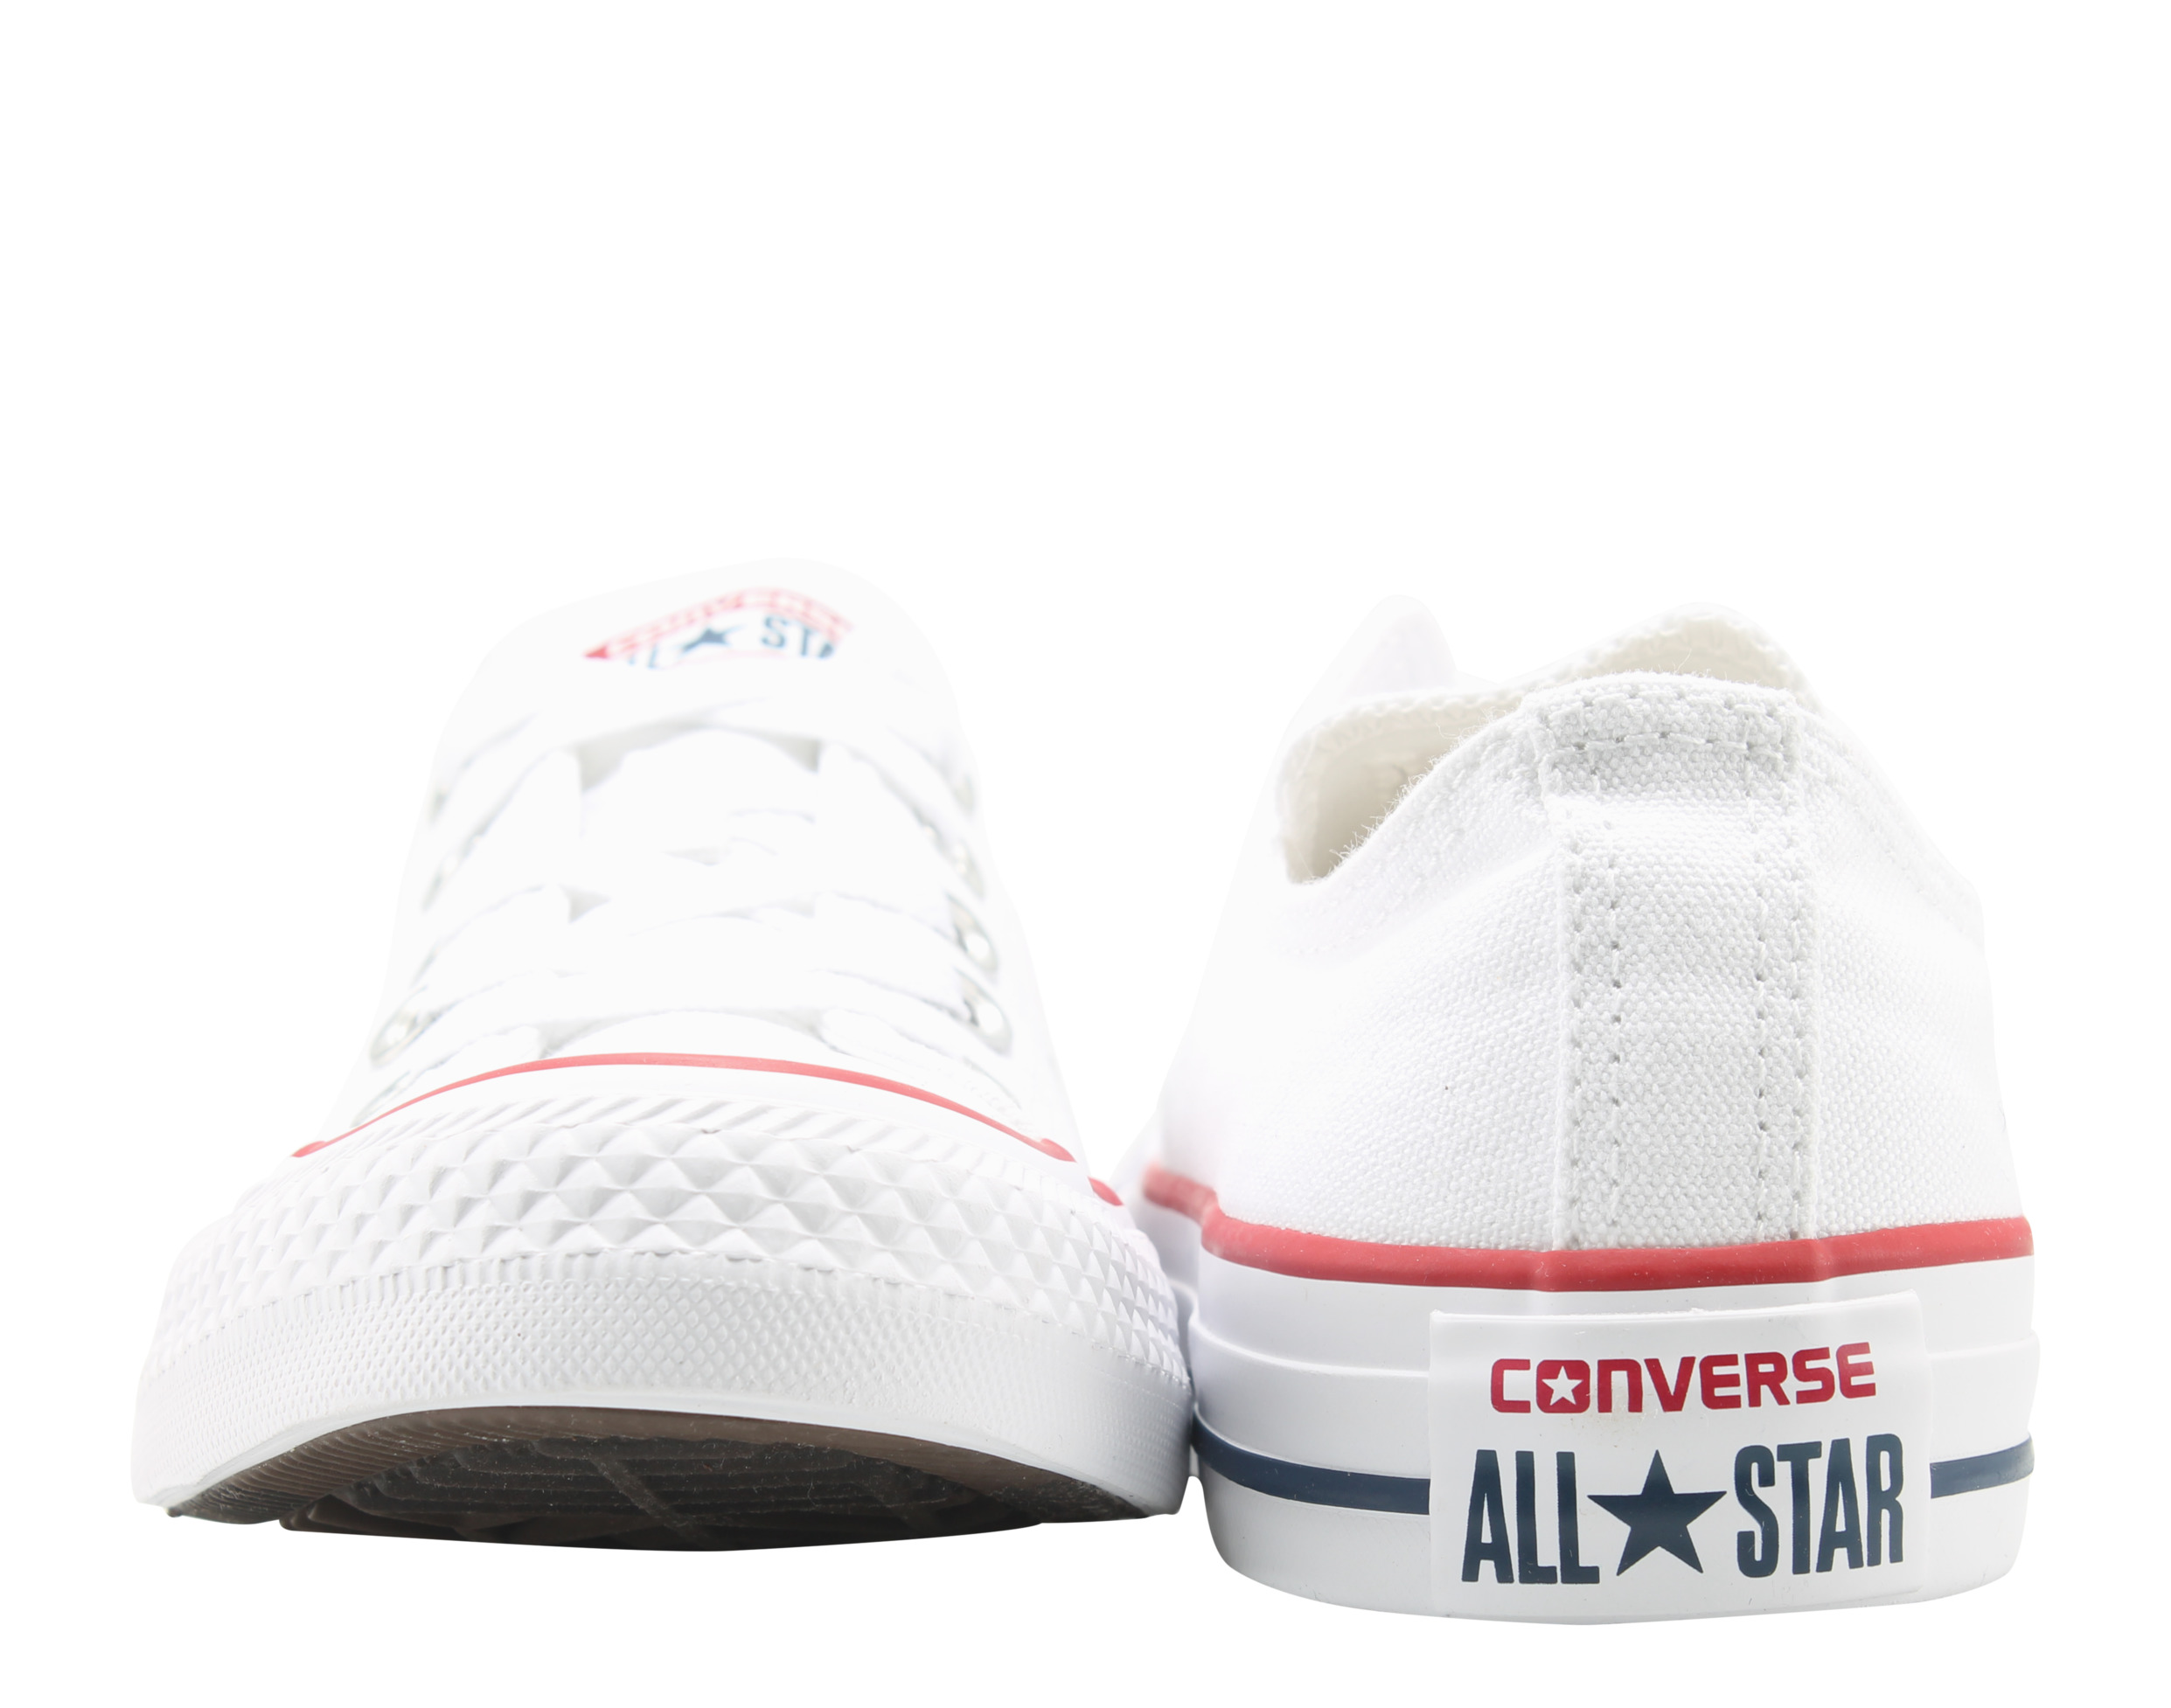 Converse Chuck Taylor All Star Low Sneaker - Walmart.com